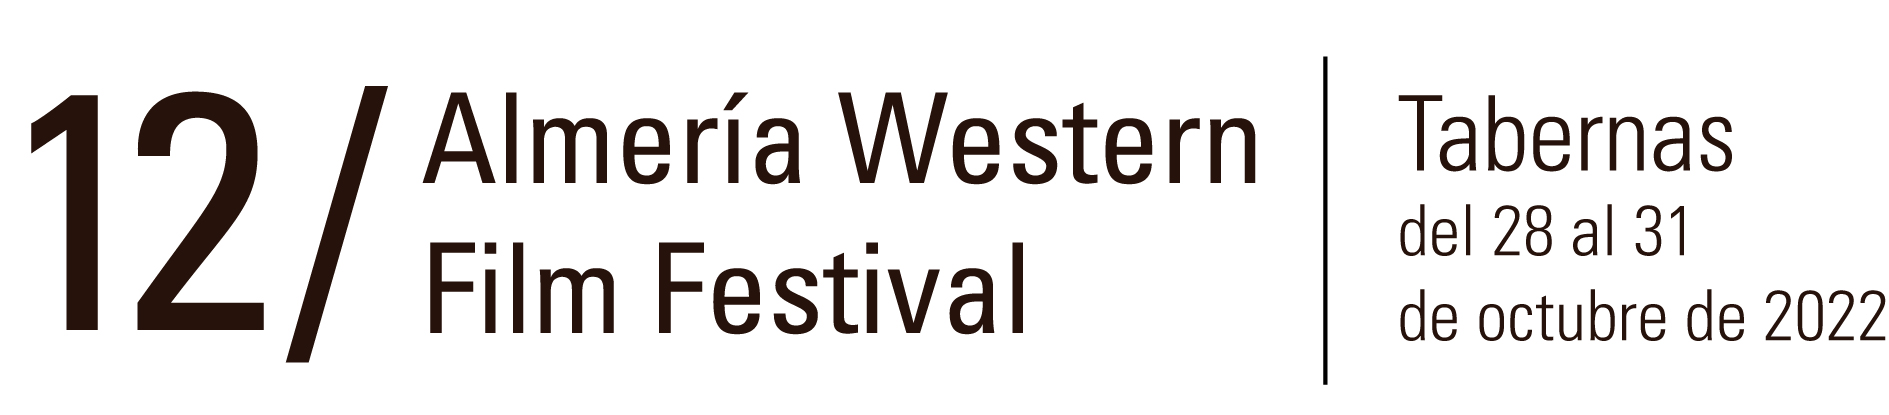 Almería Western Film Festival 2022